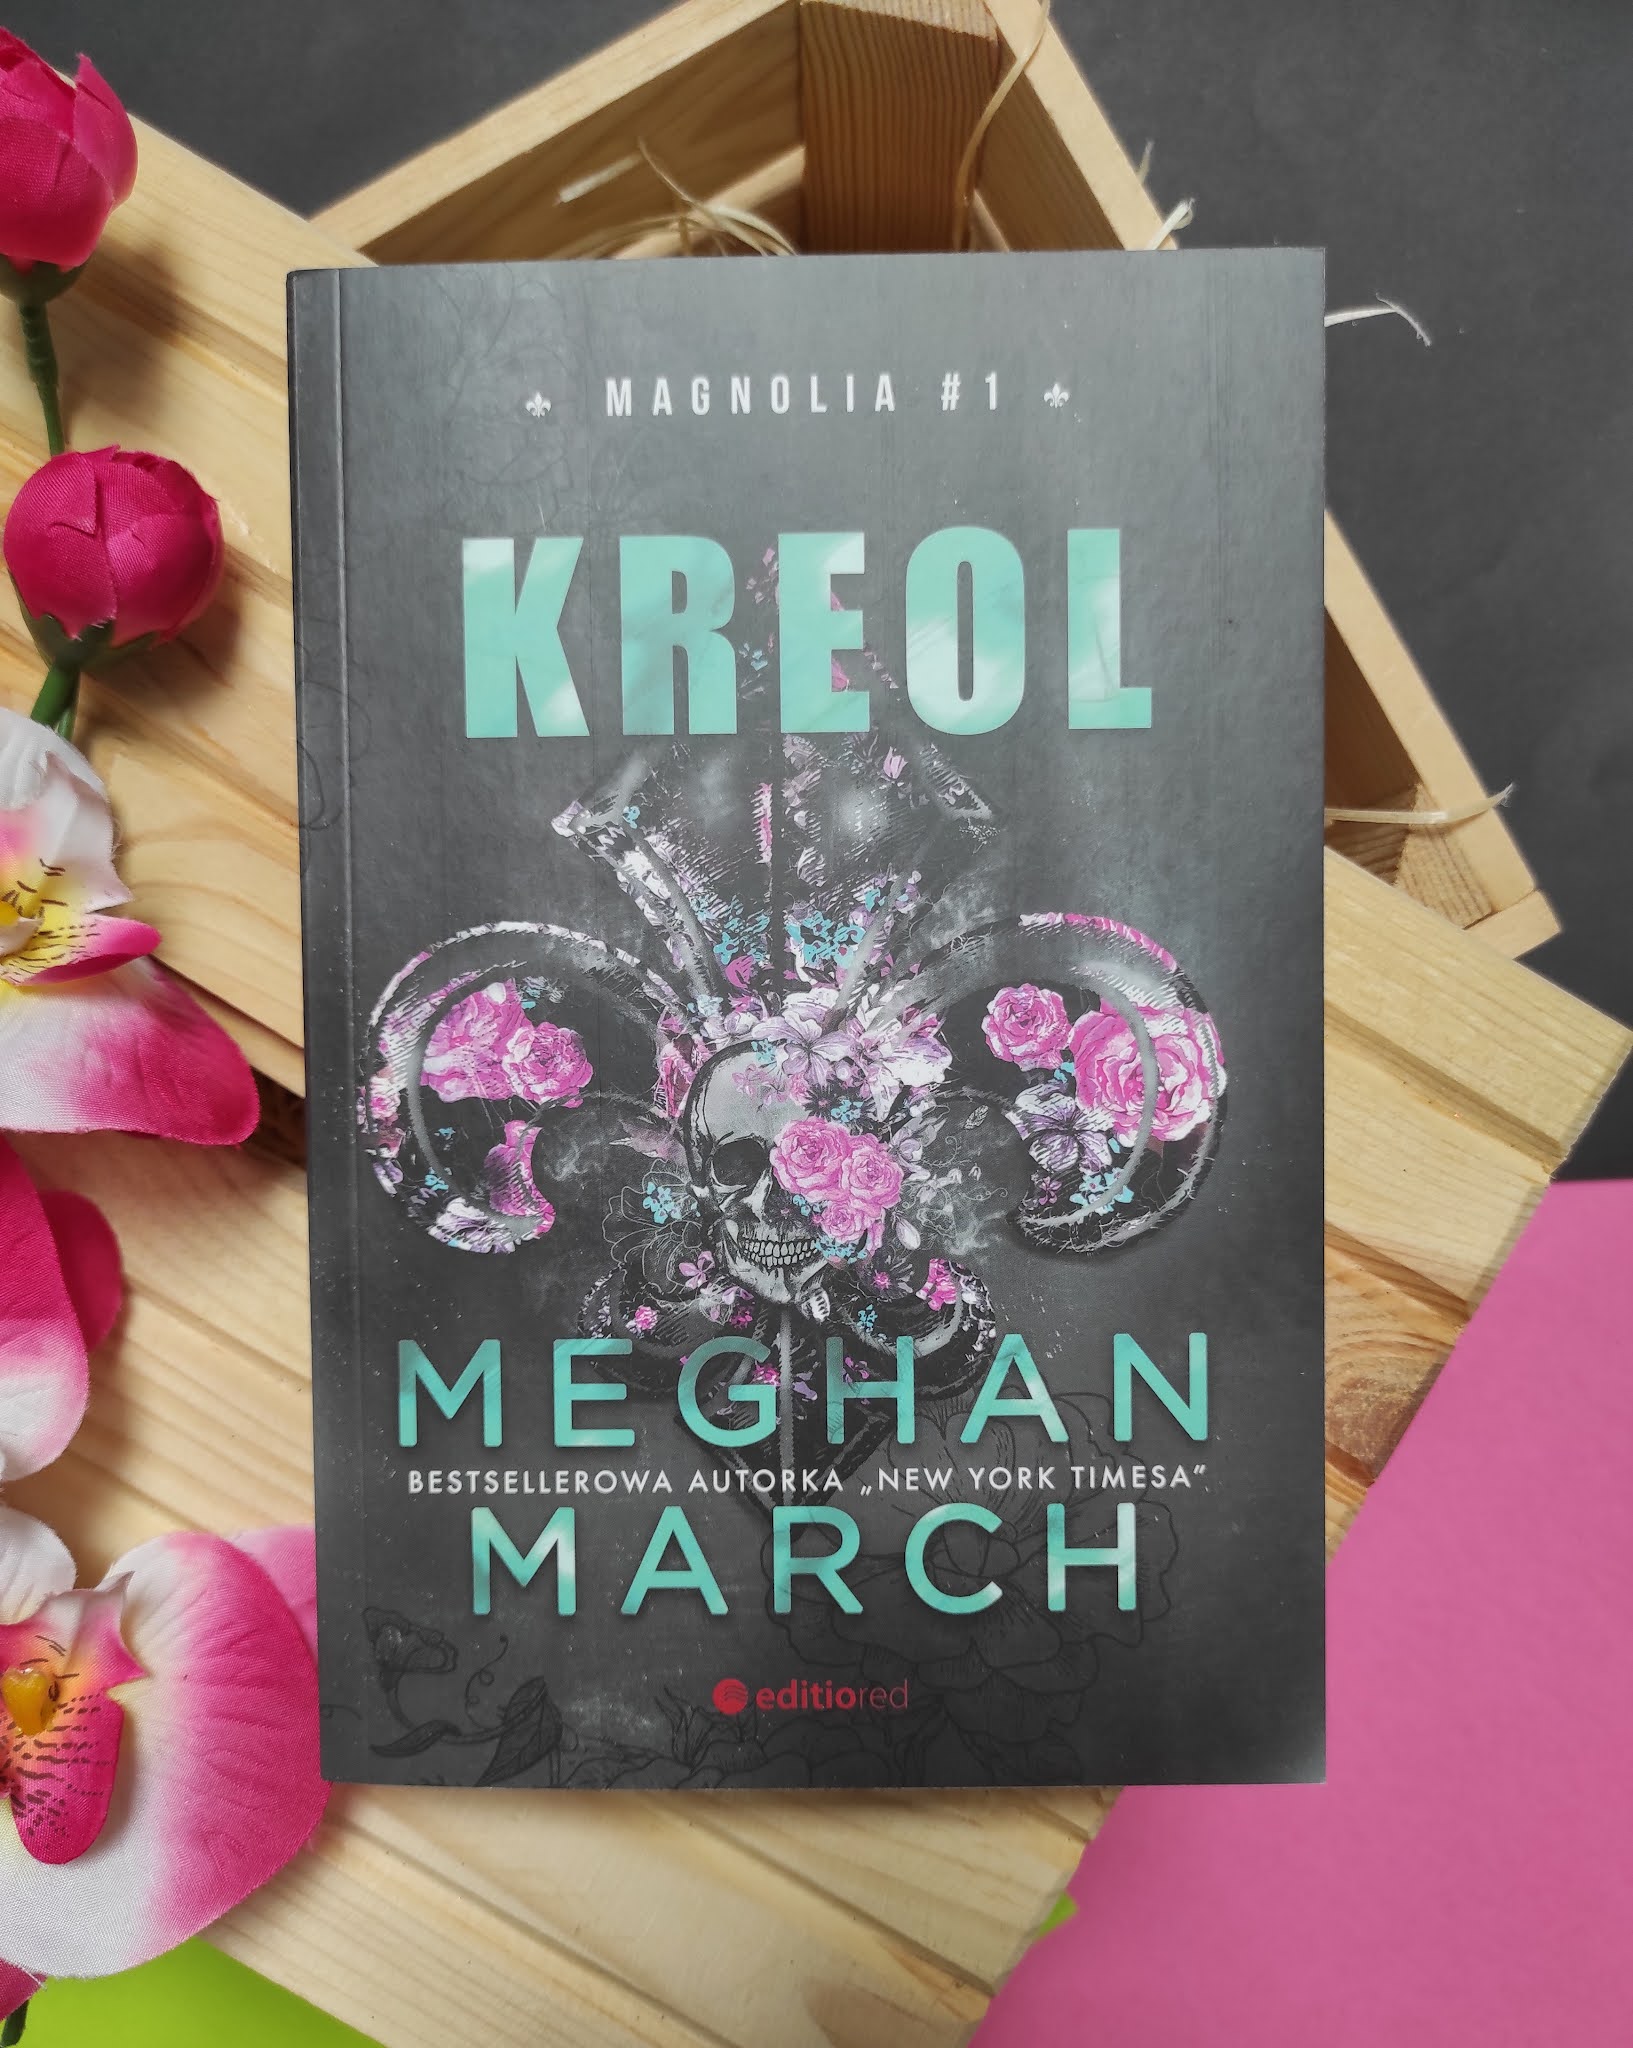 "Kreol" Magnolia #1 Meghan March - recenzja